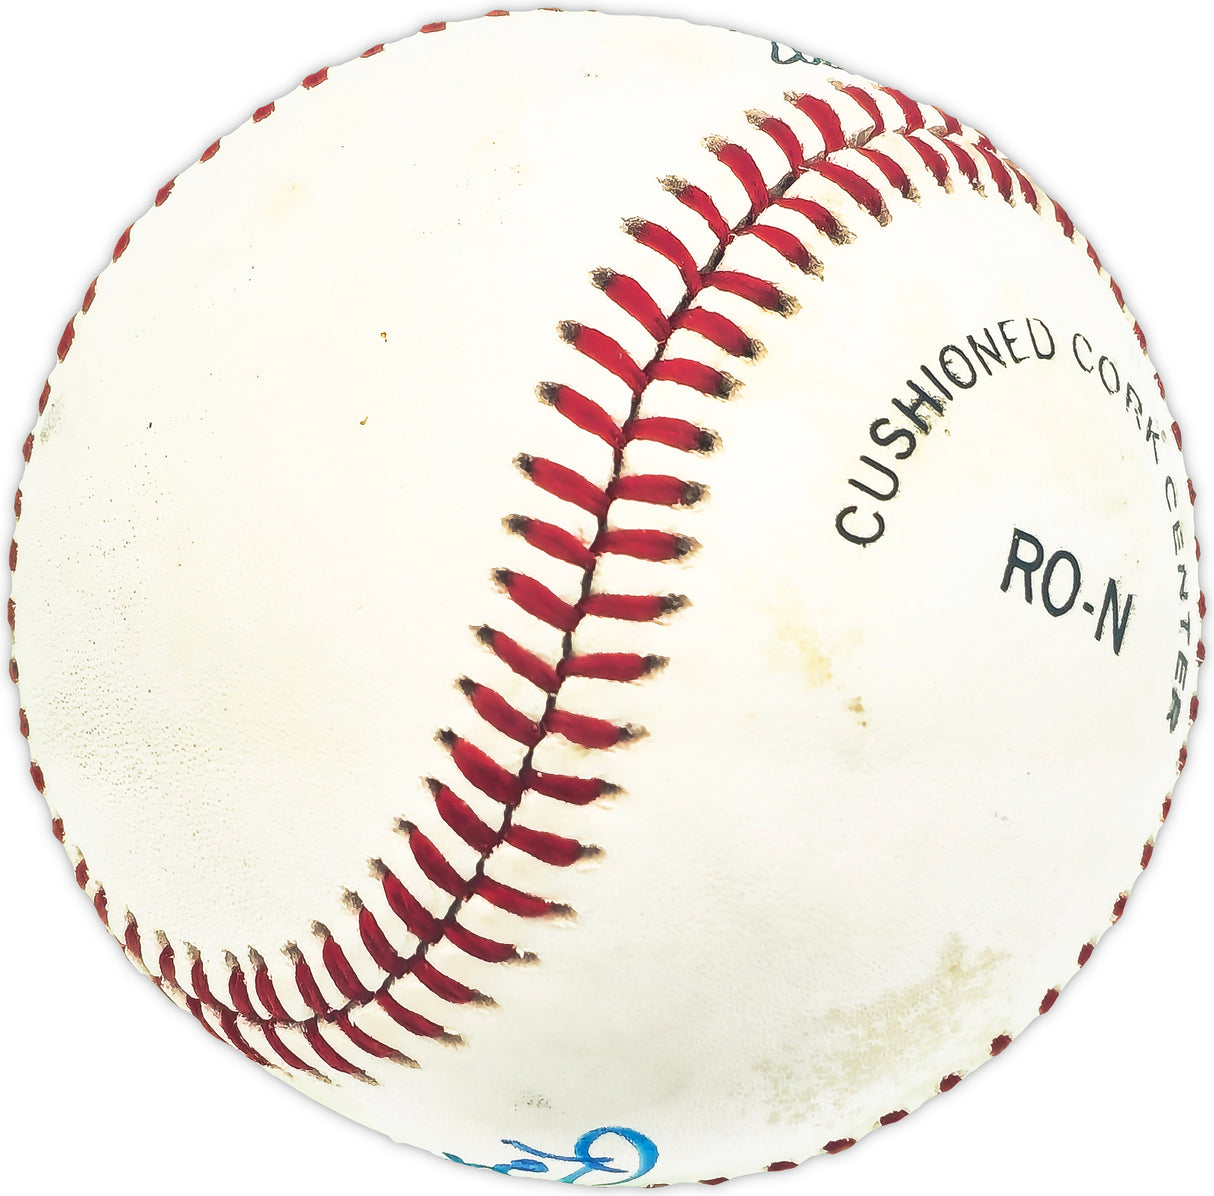 Ralph "Putsy" Caballero Autographed Official NL Baseball Philadelphia Phillies Beckett BAS QR #BM25865